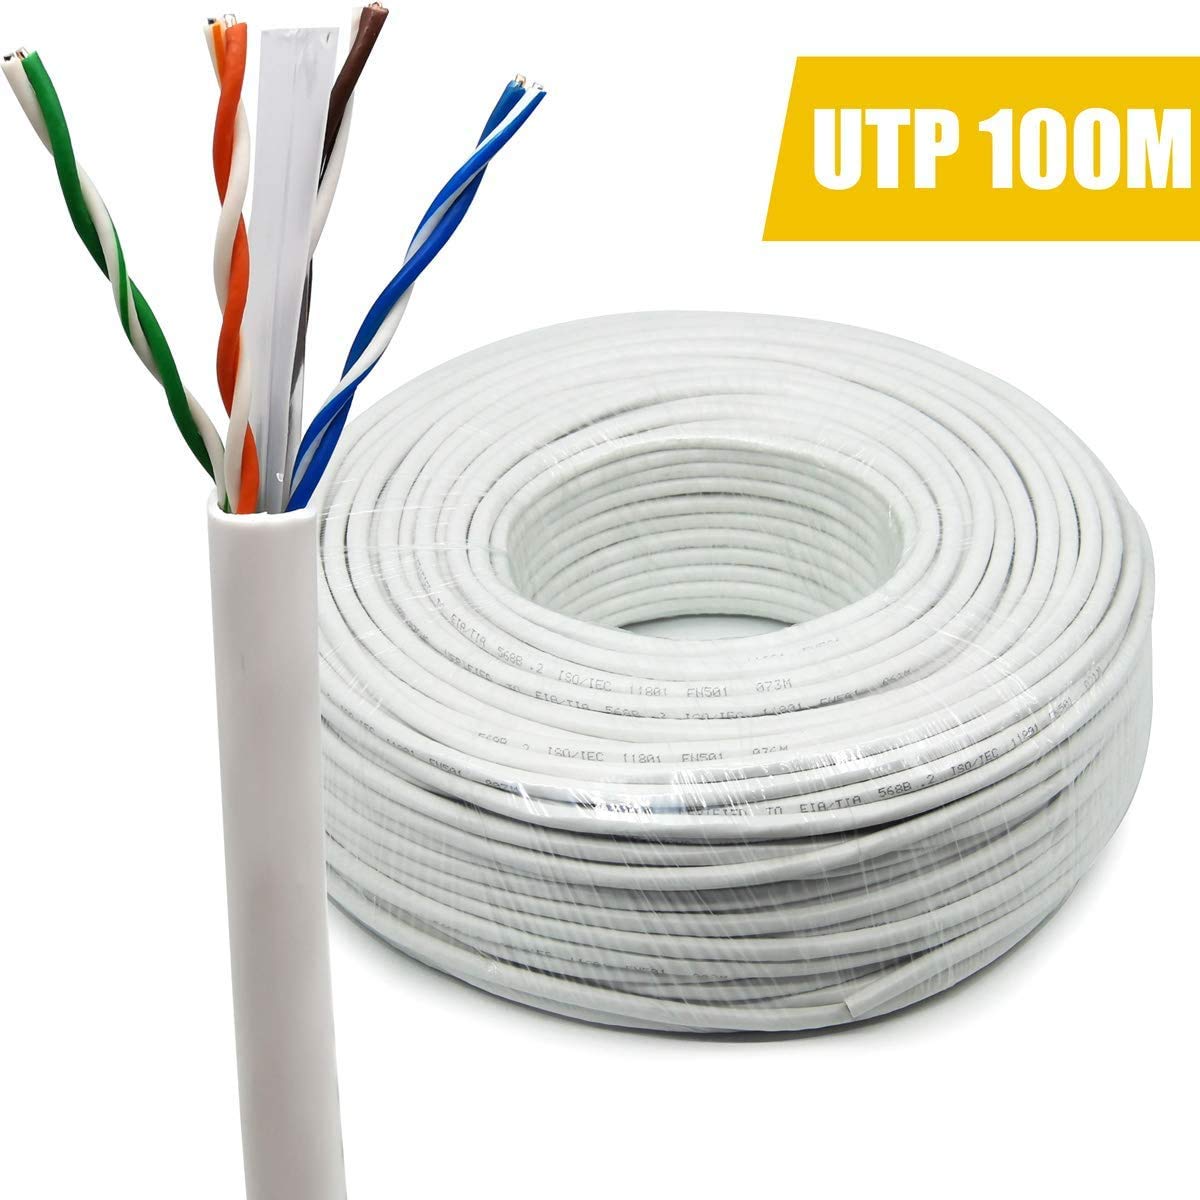 HF-CABC6-100M: 100 Meter 328 ft Ethernet LAN CAT6 UTP Network Networking Bulk Cable Solid Copper 100m 23AWG Light (White) Grey